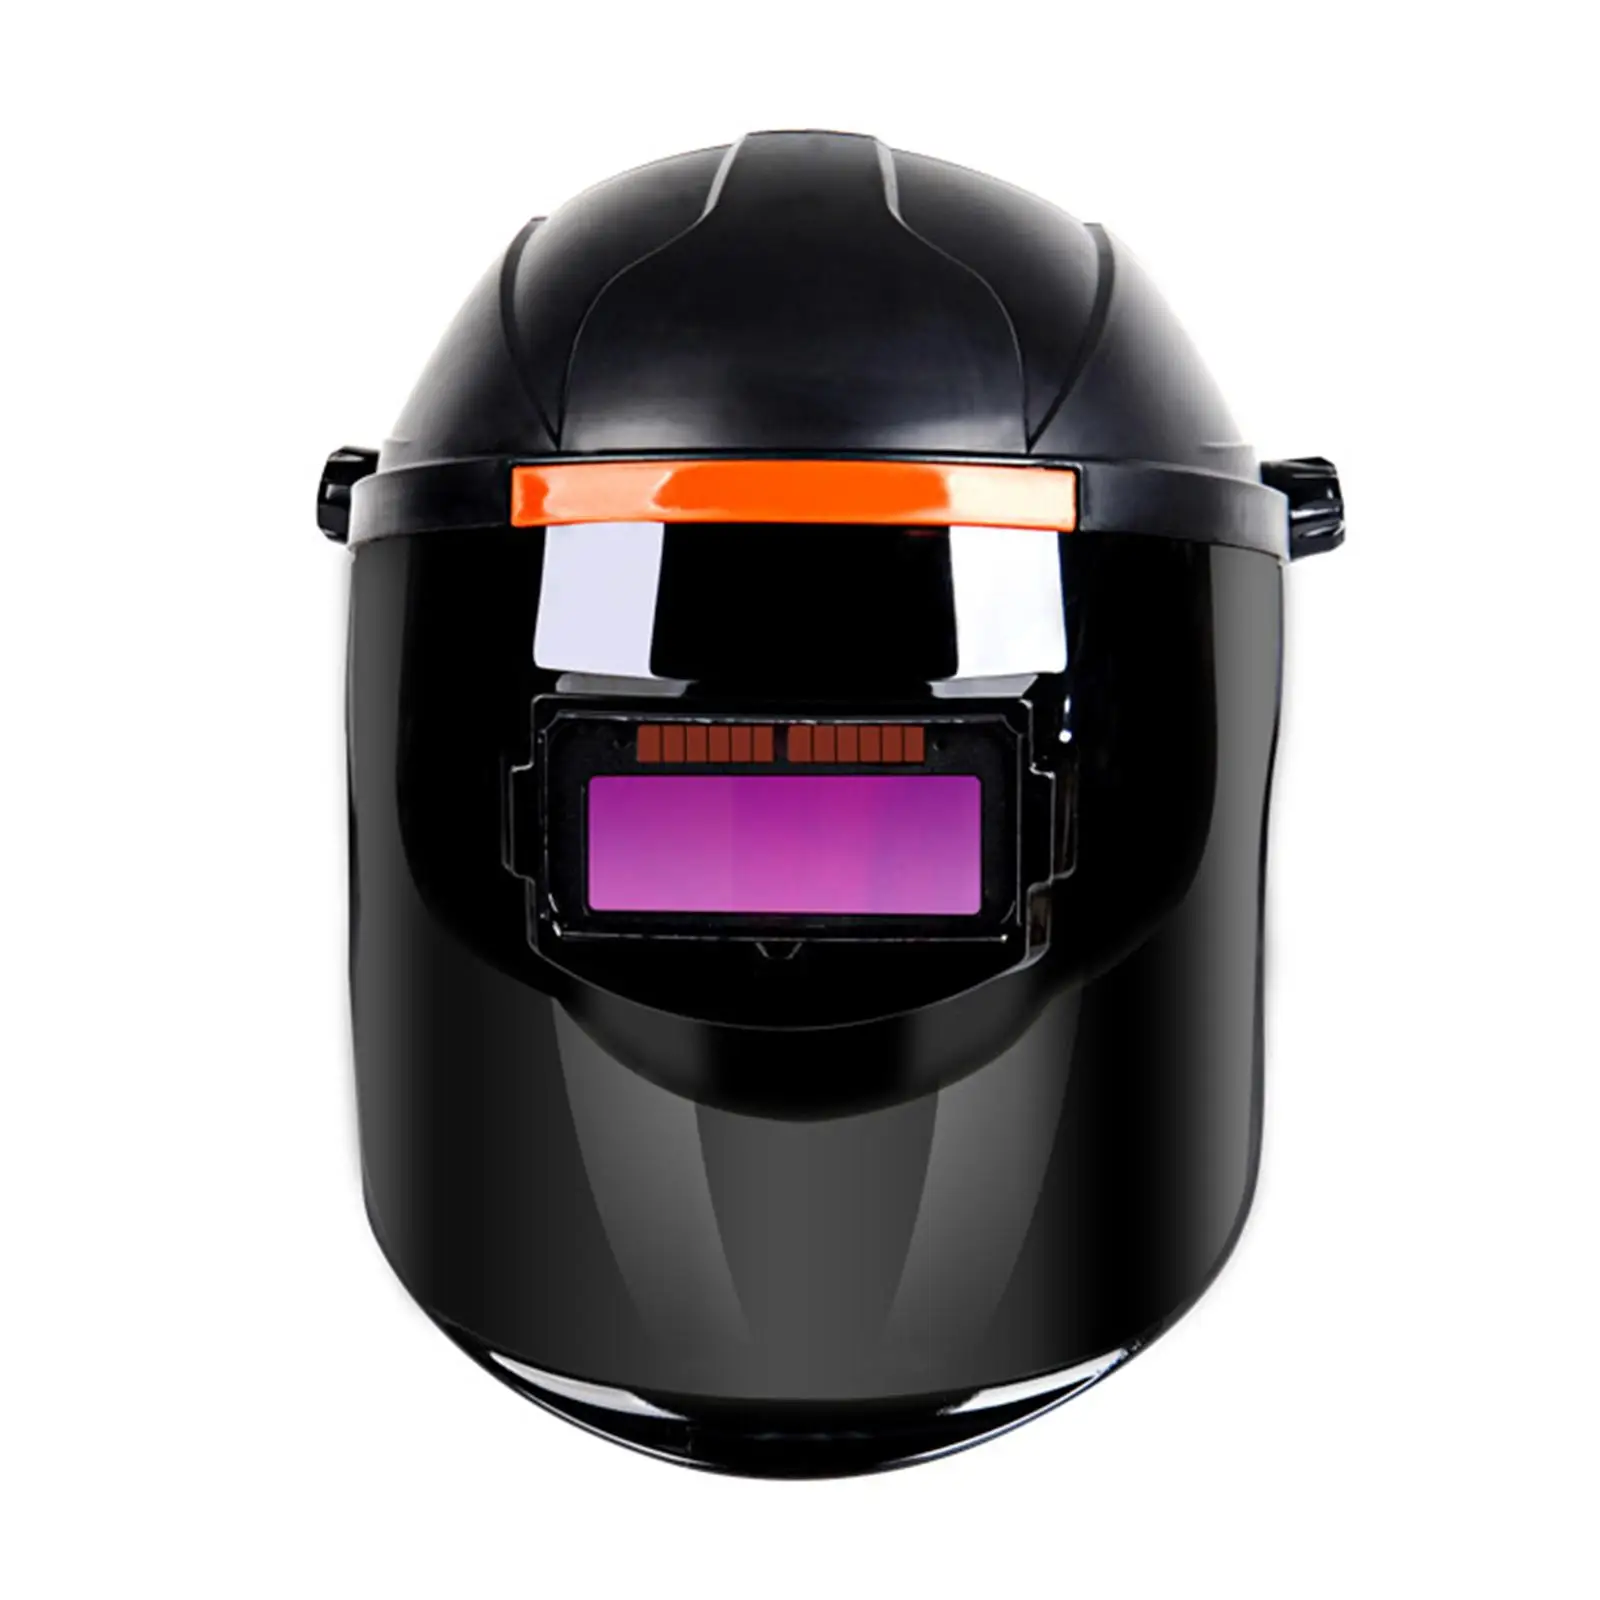 Solar Powered Auto Darkening Welding Helmet Welding Mask Large Lens Shade Range 9 to 13 Equipment Industrial Use Fixed Adjusted